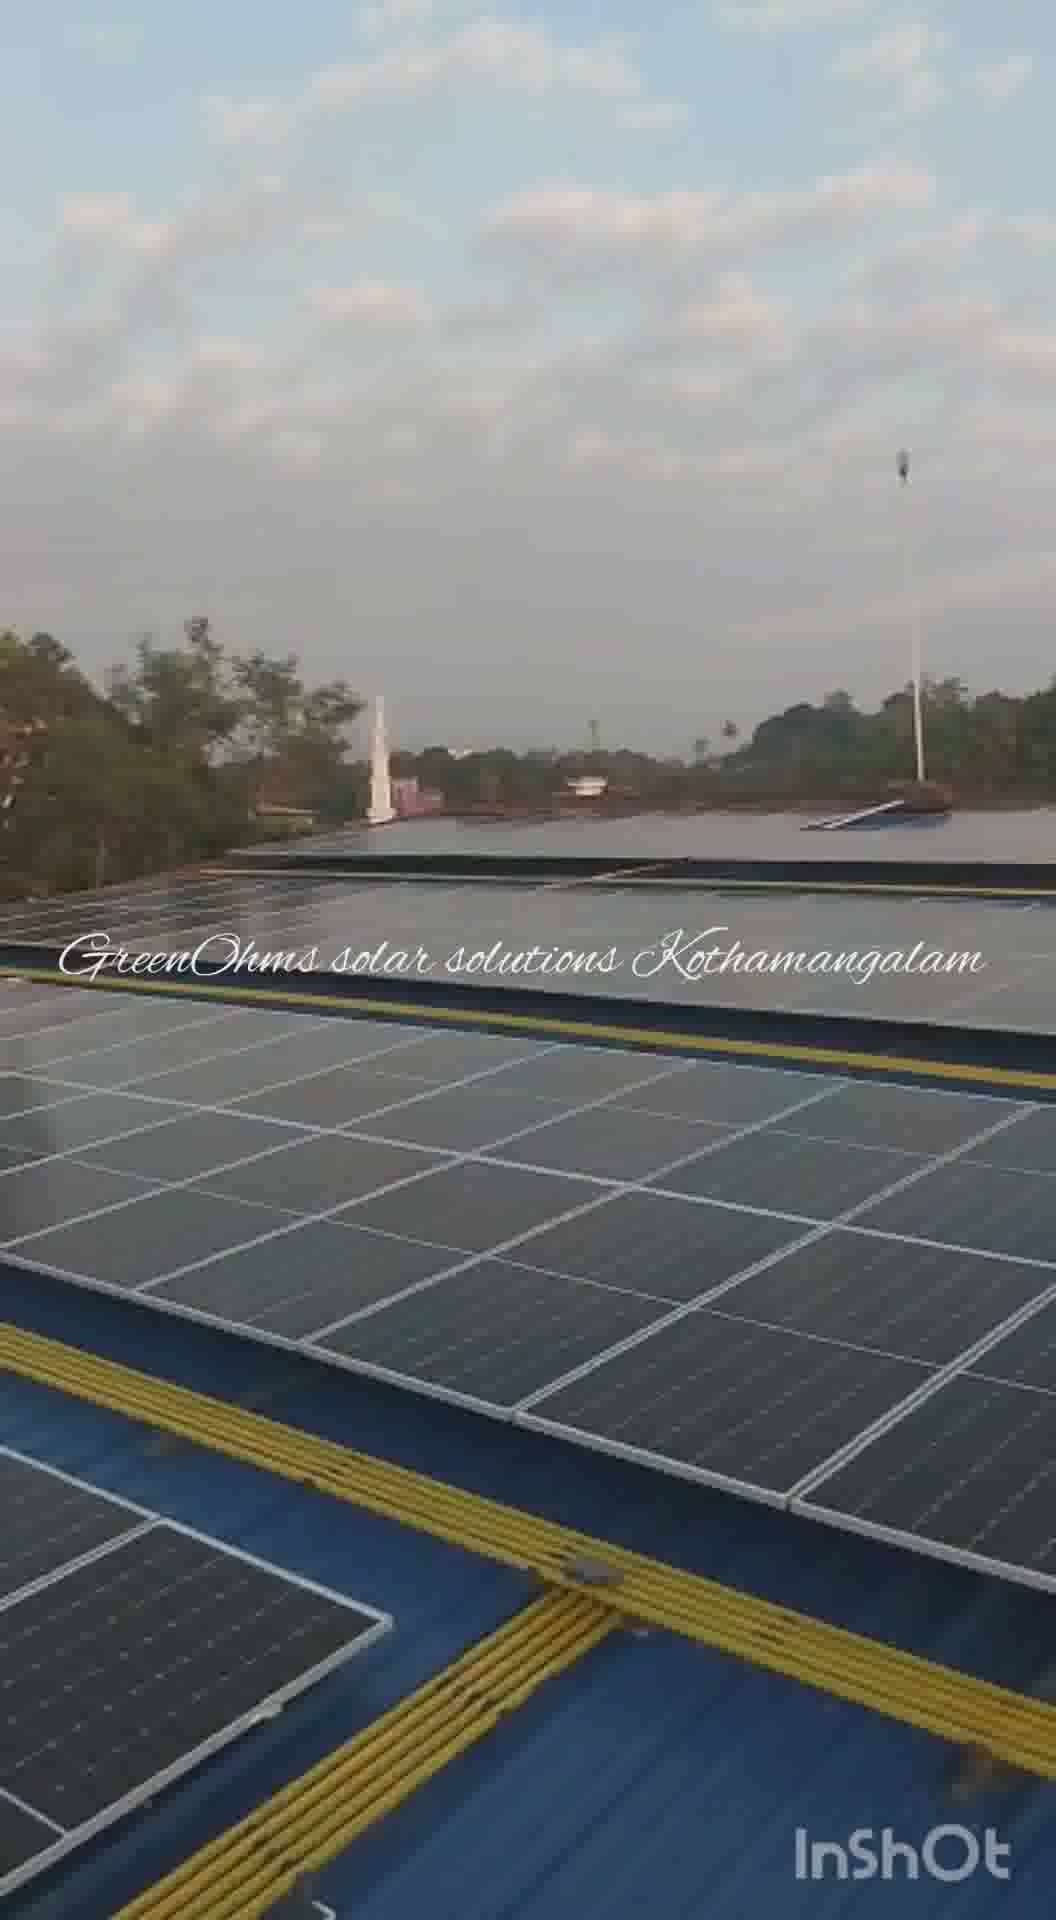 GreenOhms solar solutions